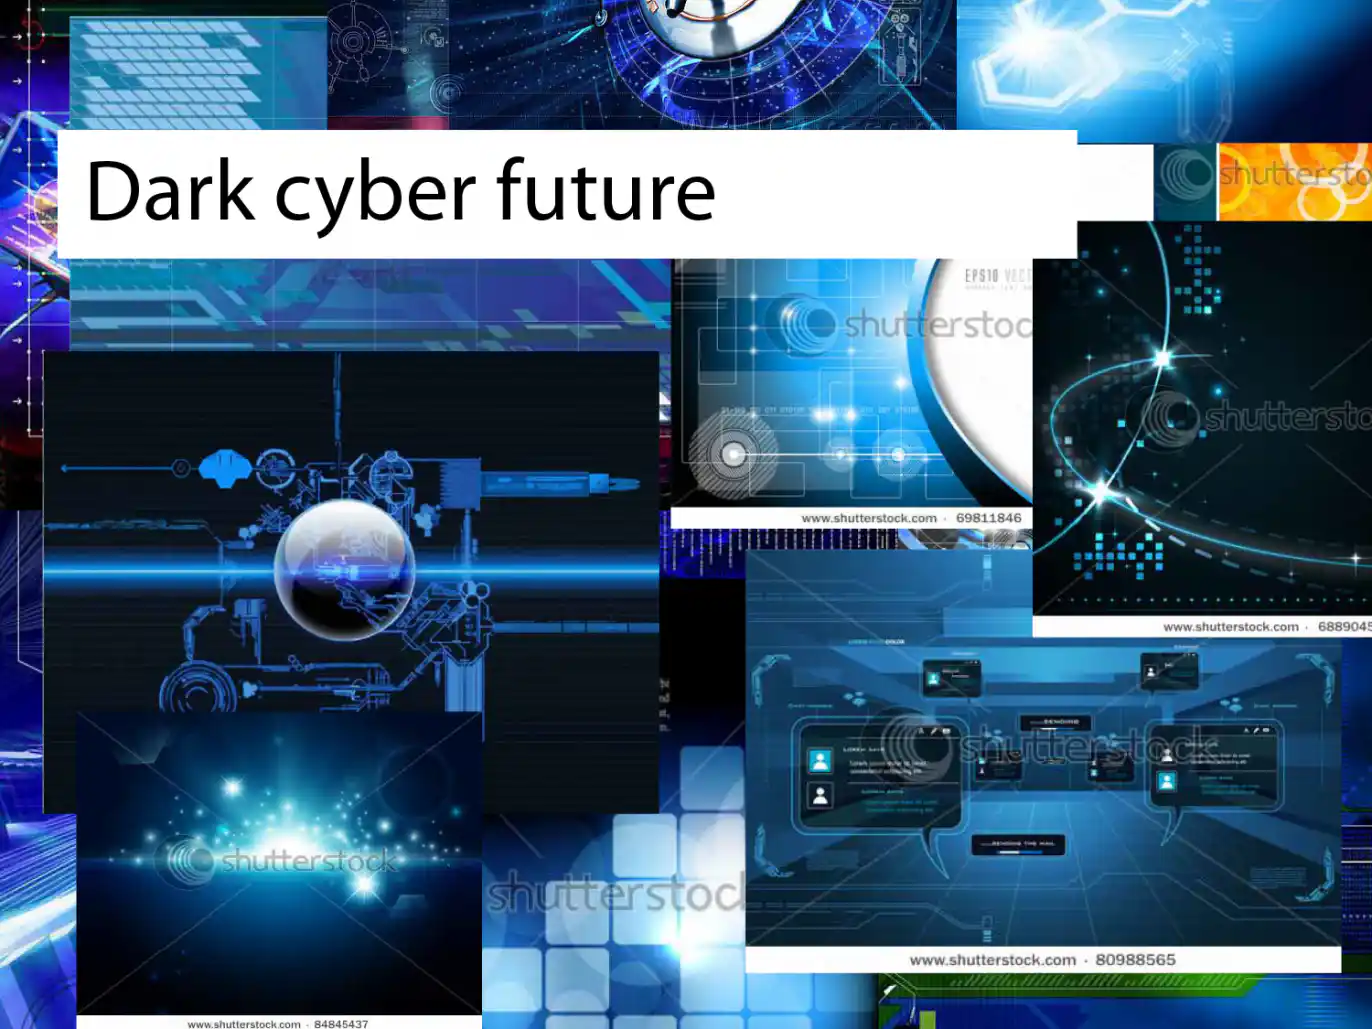 image showing dark cyber future design style